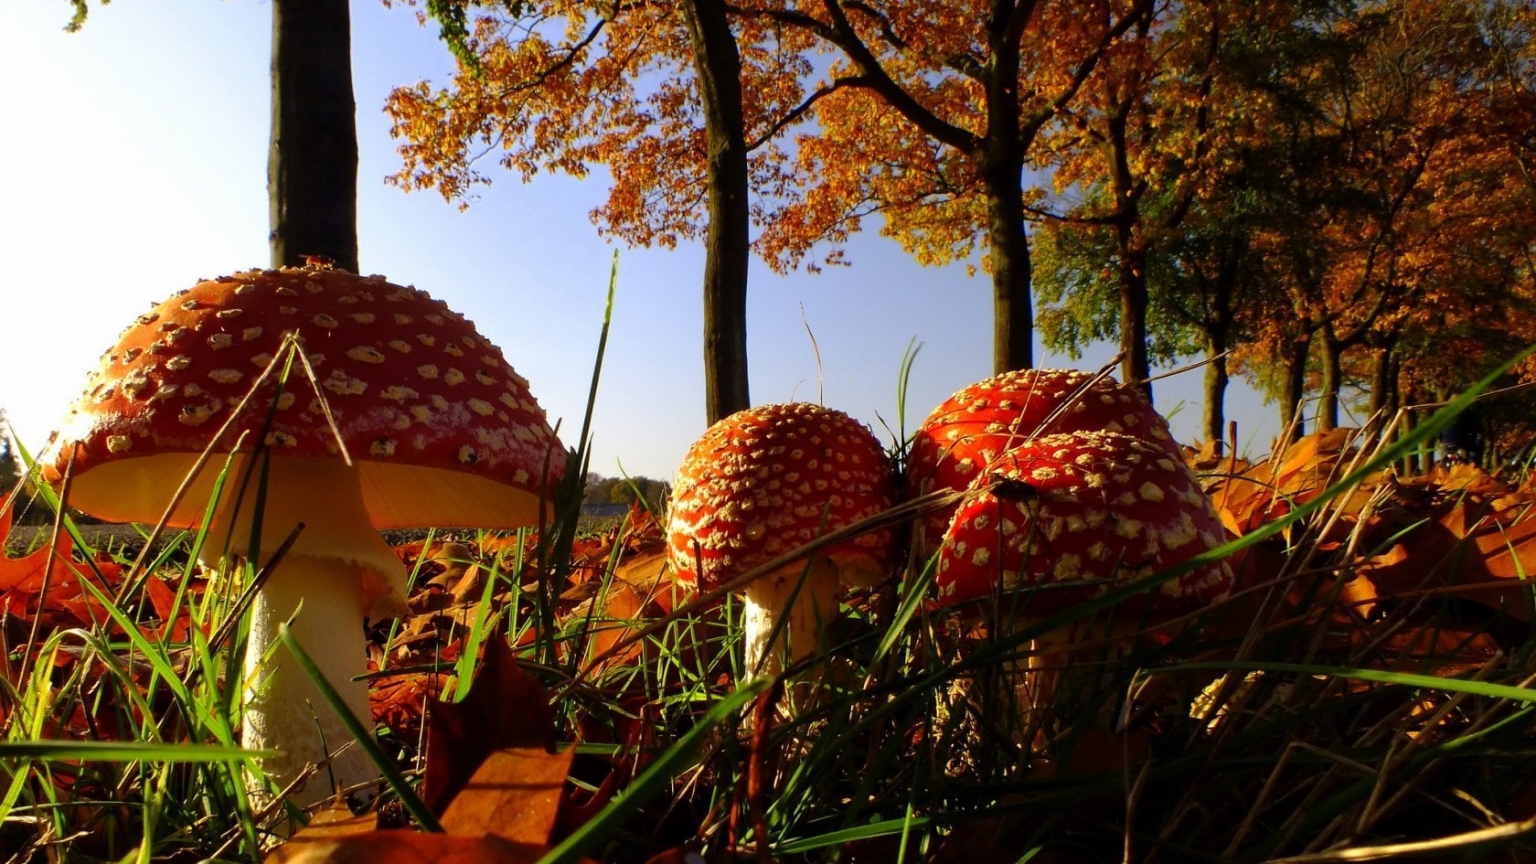 Forest Mushrooms for 1536 x 864 HDTV resolution